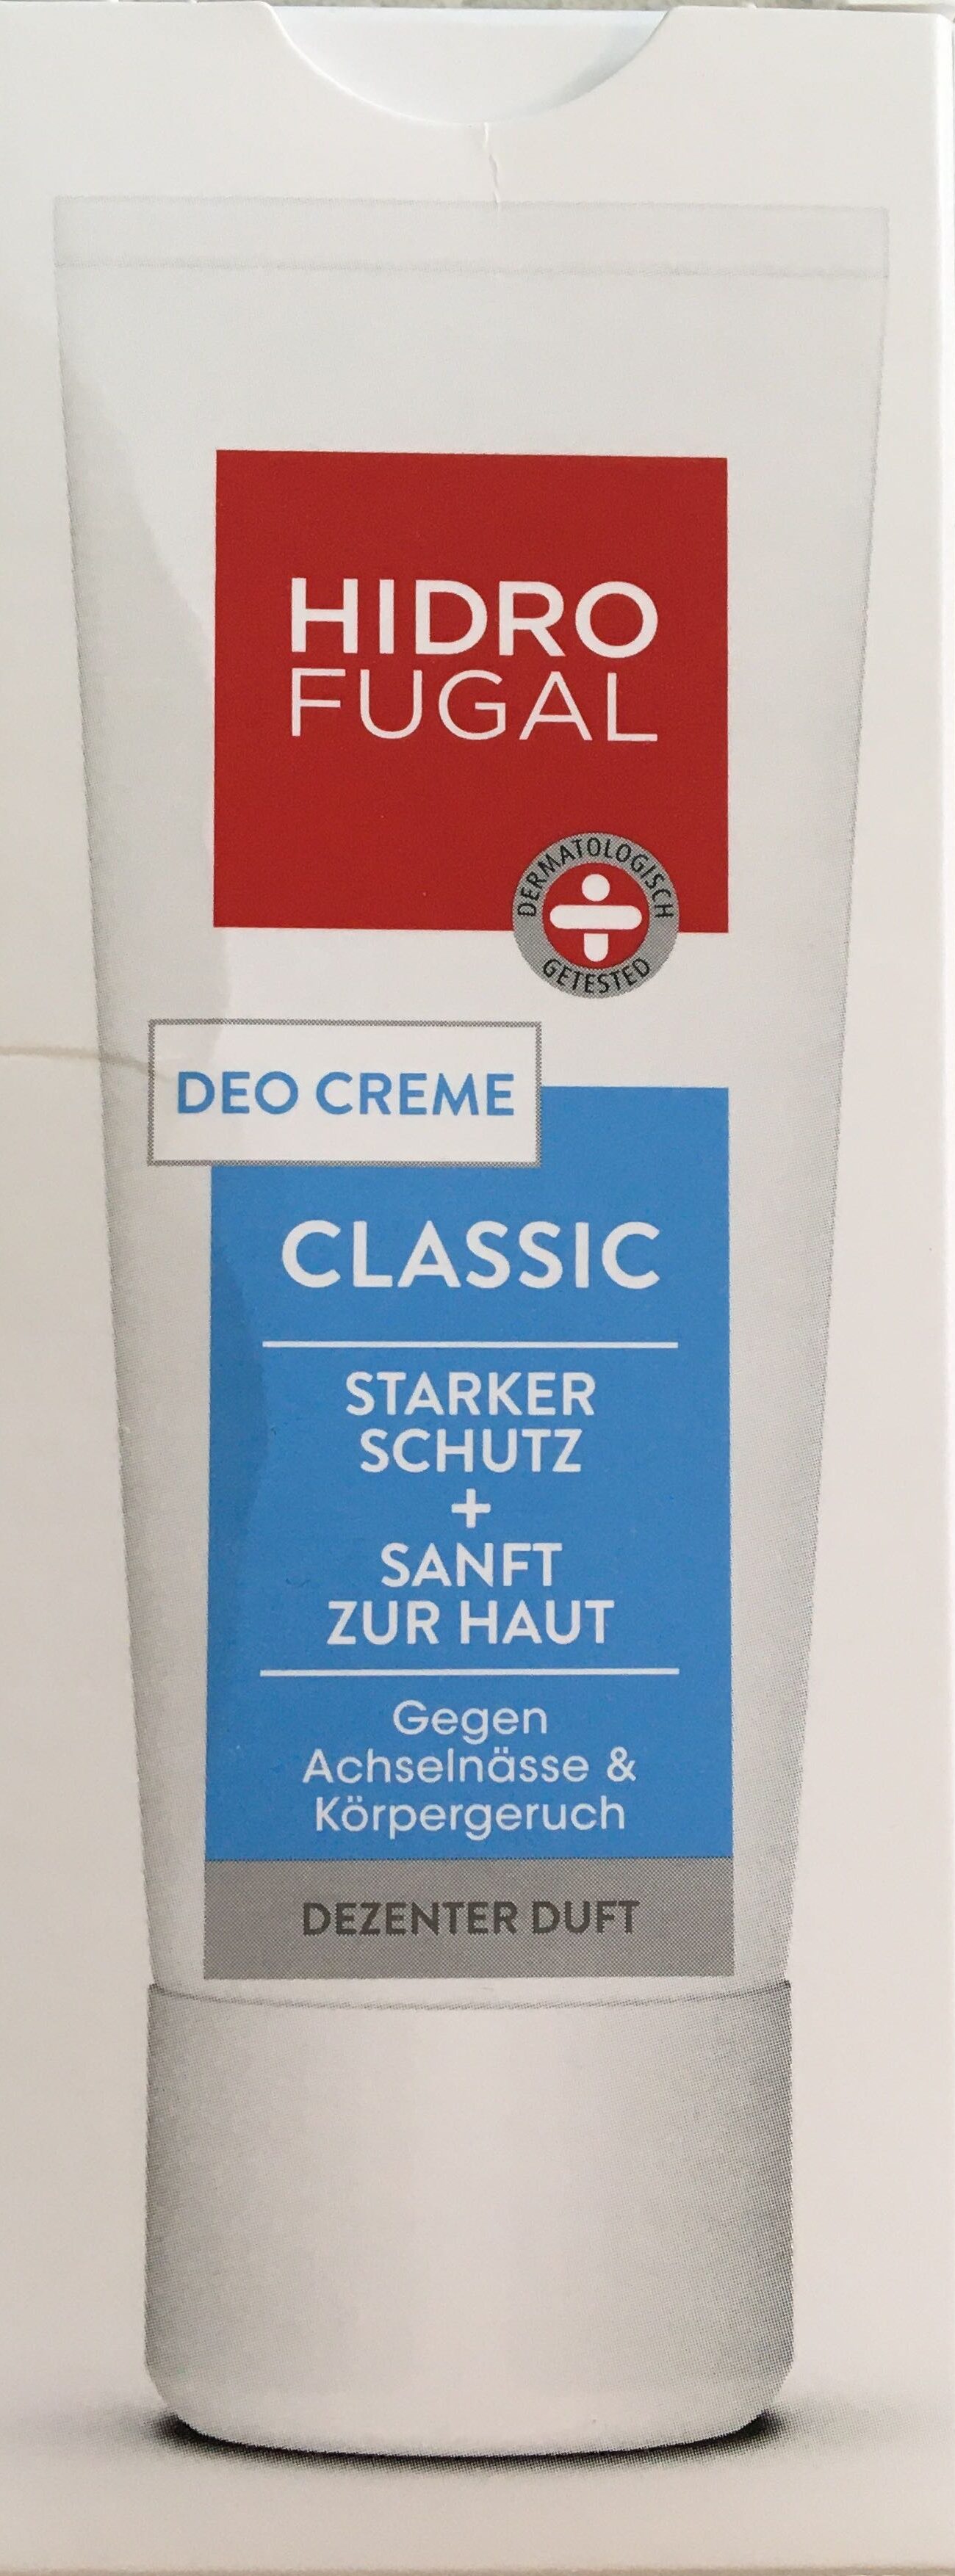 Classic Deo Creme - Product - en